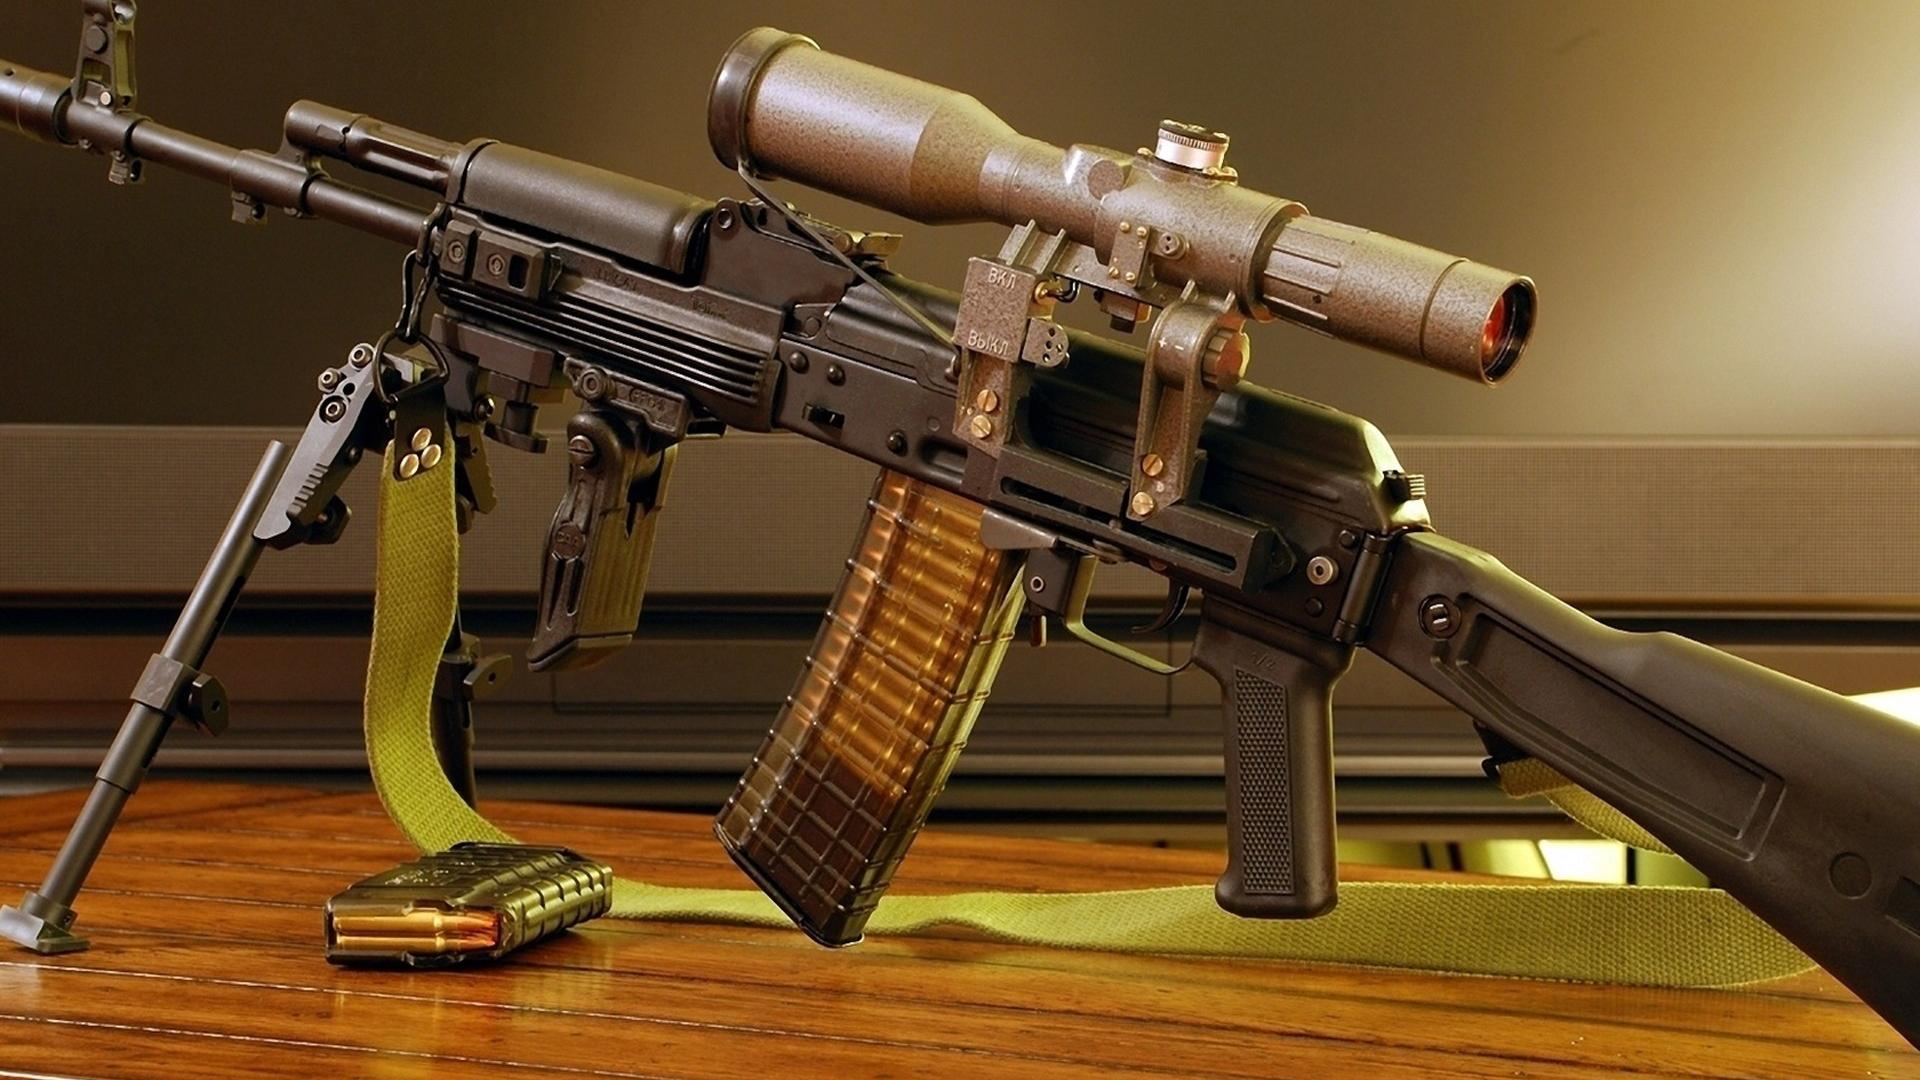 Sniper-guns-hd-wallpaper-free-download-background-image-of-guns